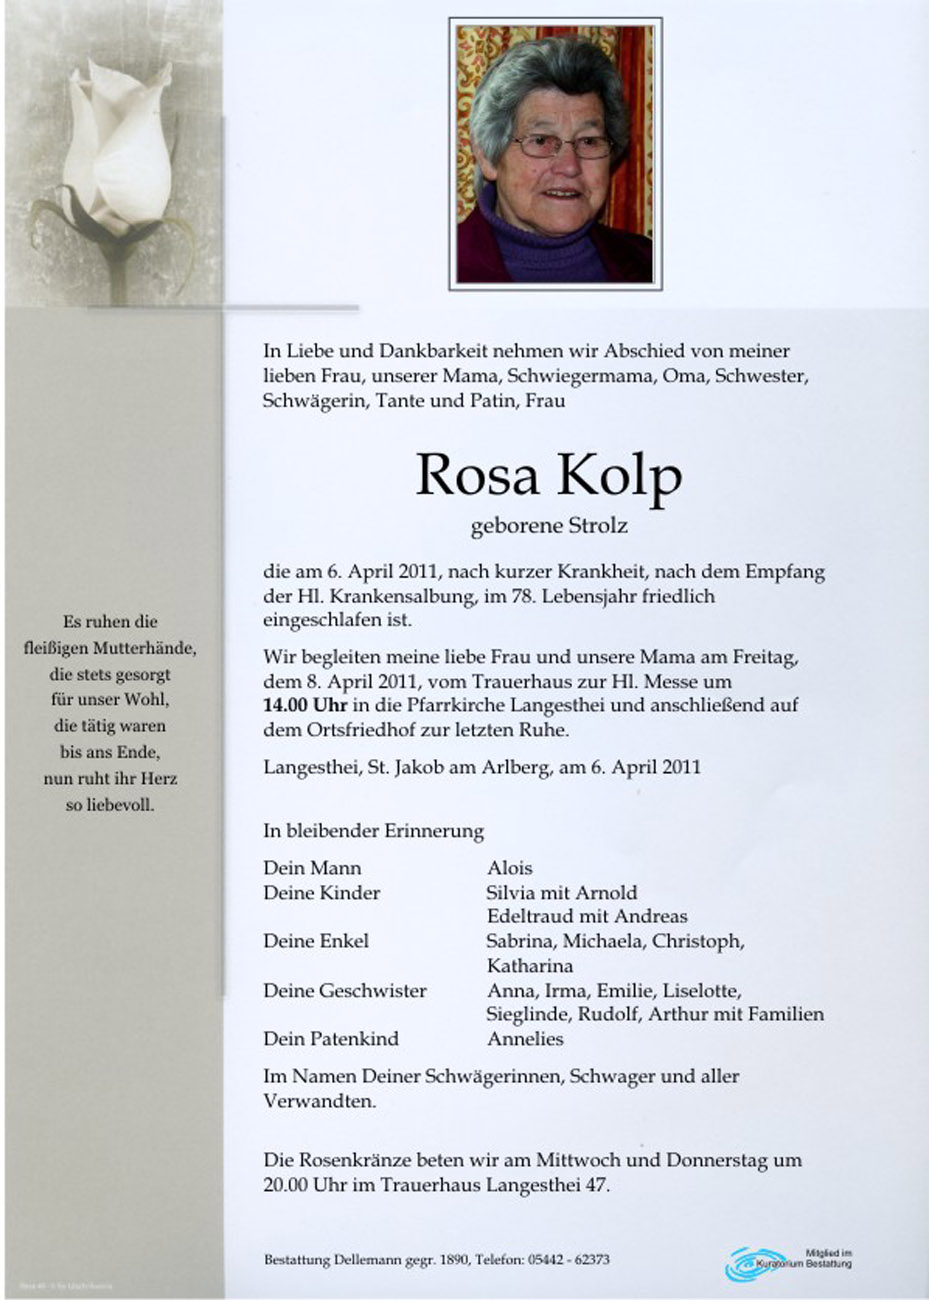   Rosa Kolp